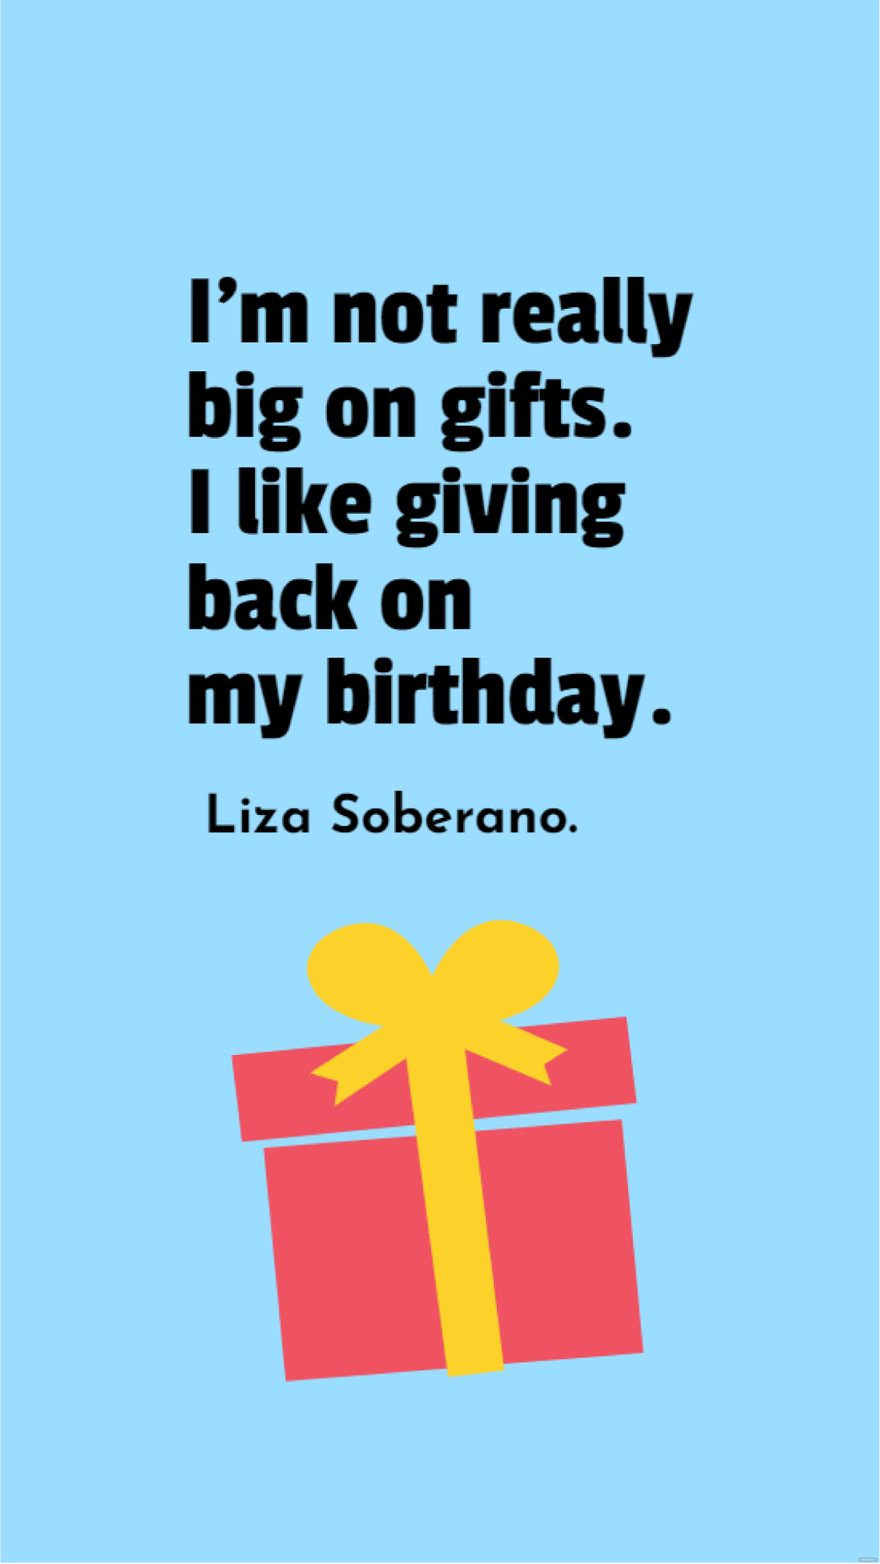 Free Liza Soberano - I'm not really big on gifts. I like giving back on my birthday. in JPG